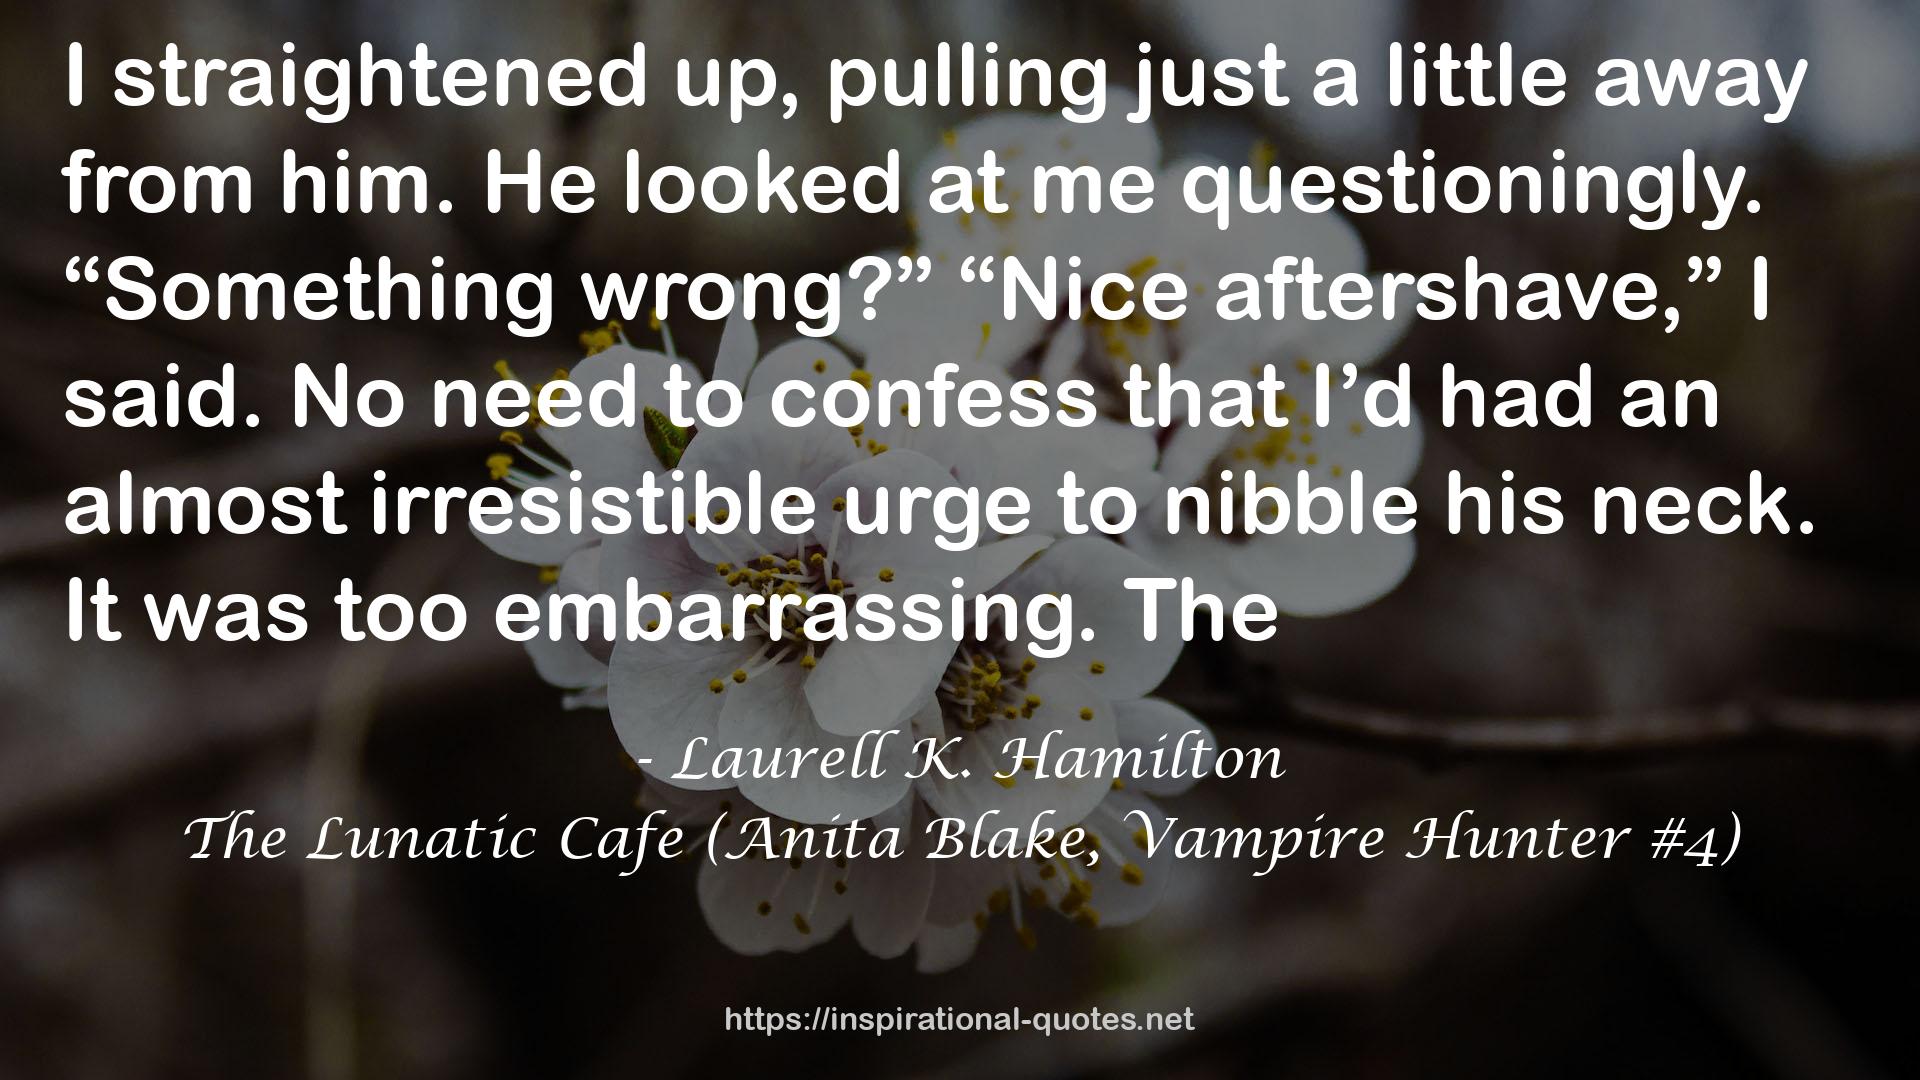 The Lunatic Cafe (Anita Blake, Vampire Hunter #4) QUOTES